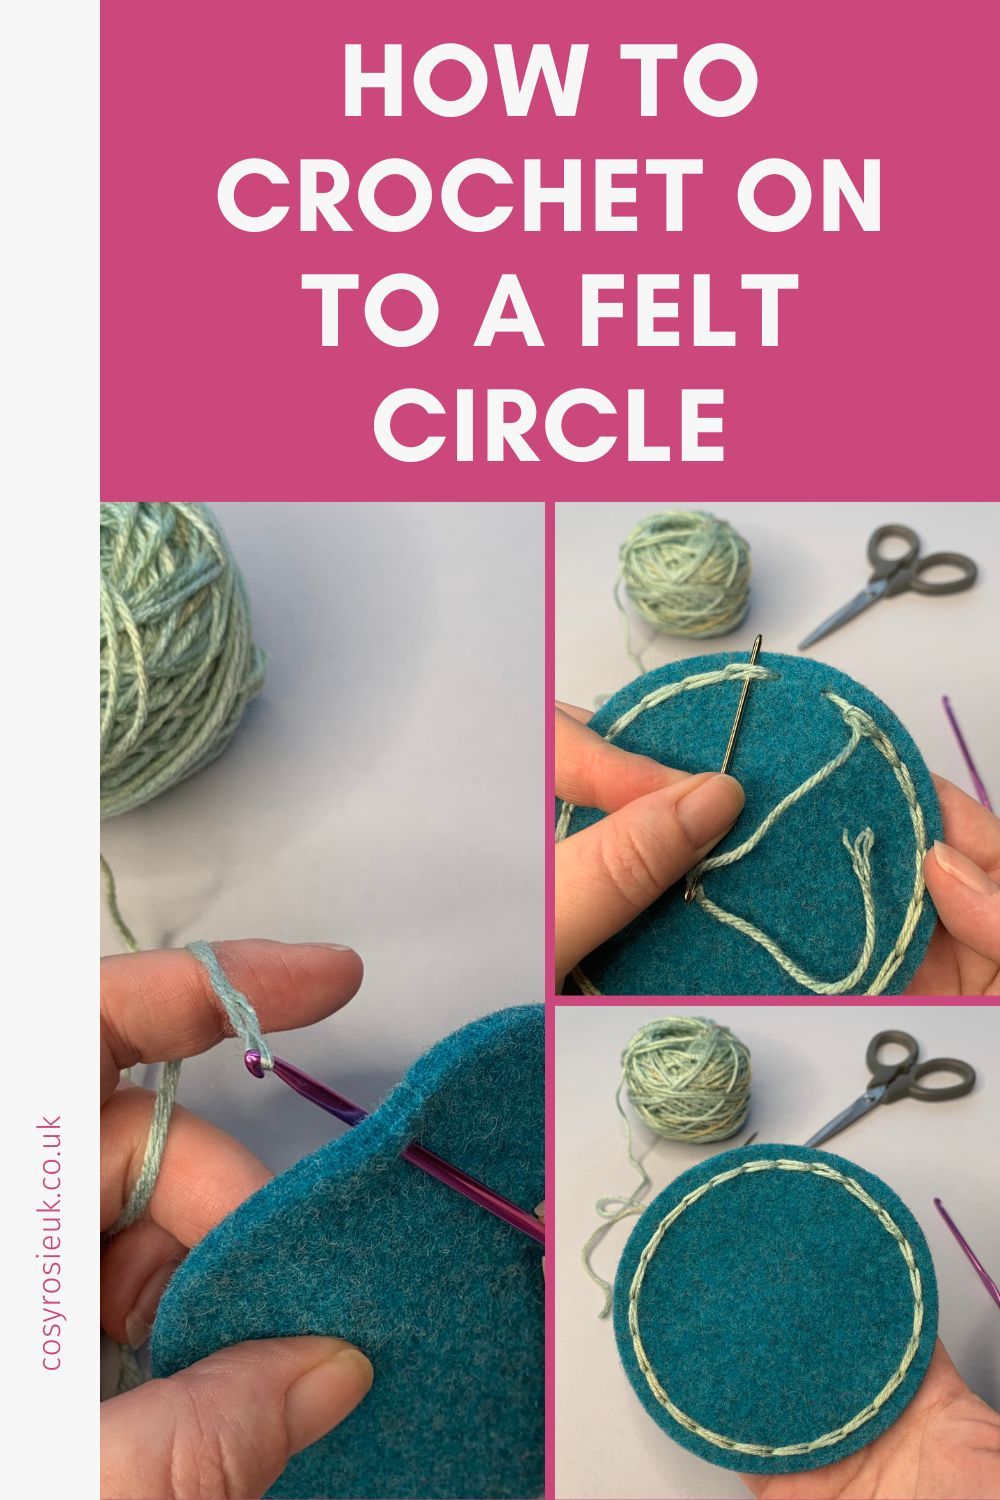 How to crochet on a Felt Circle
